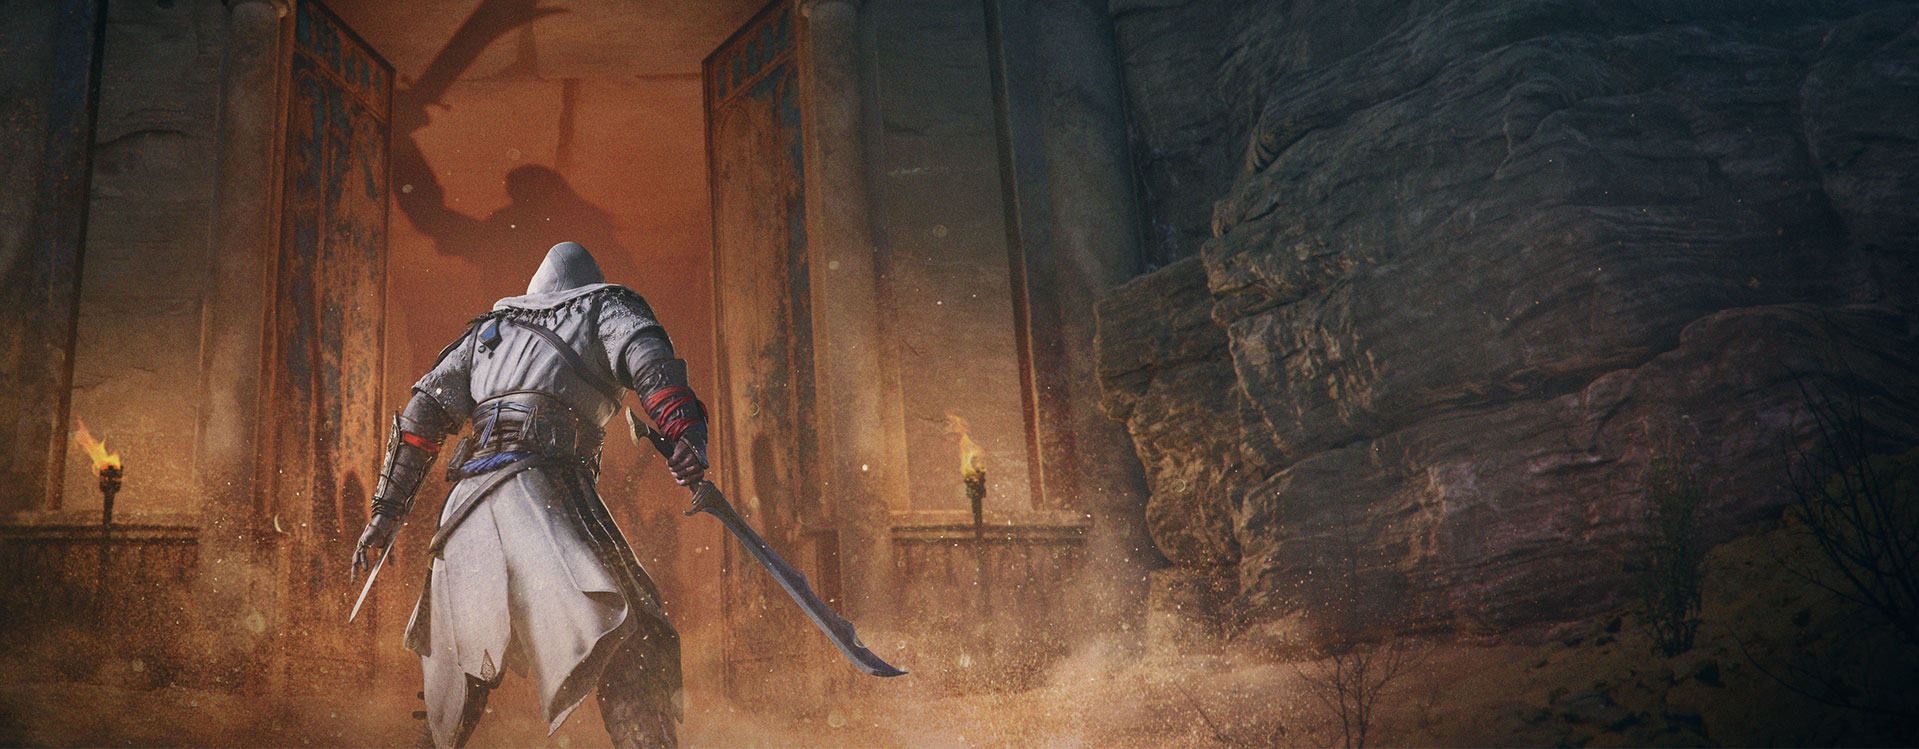  Ubisoft: Assassin's Creed Mirage